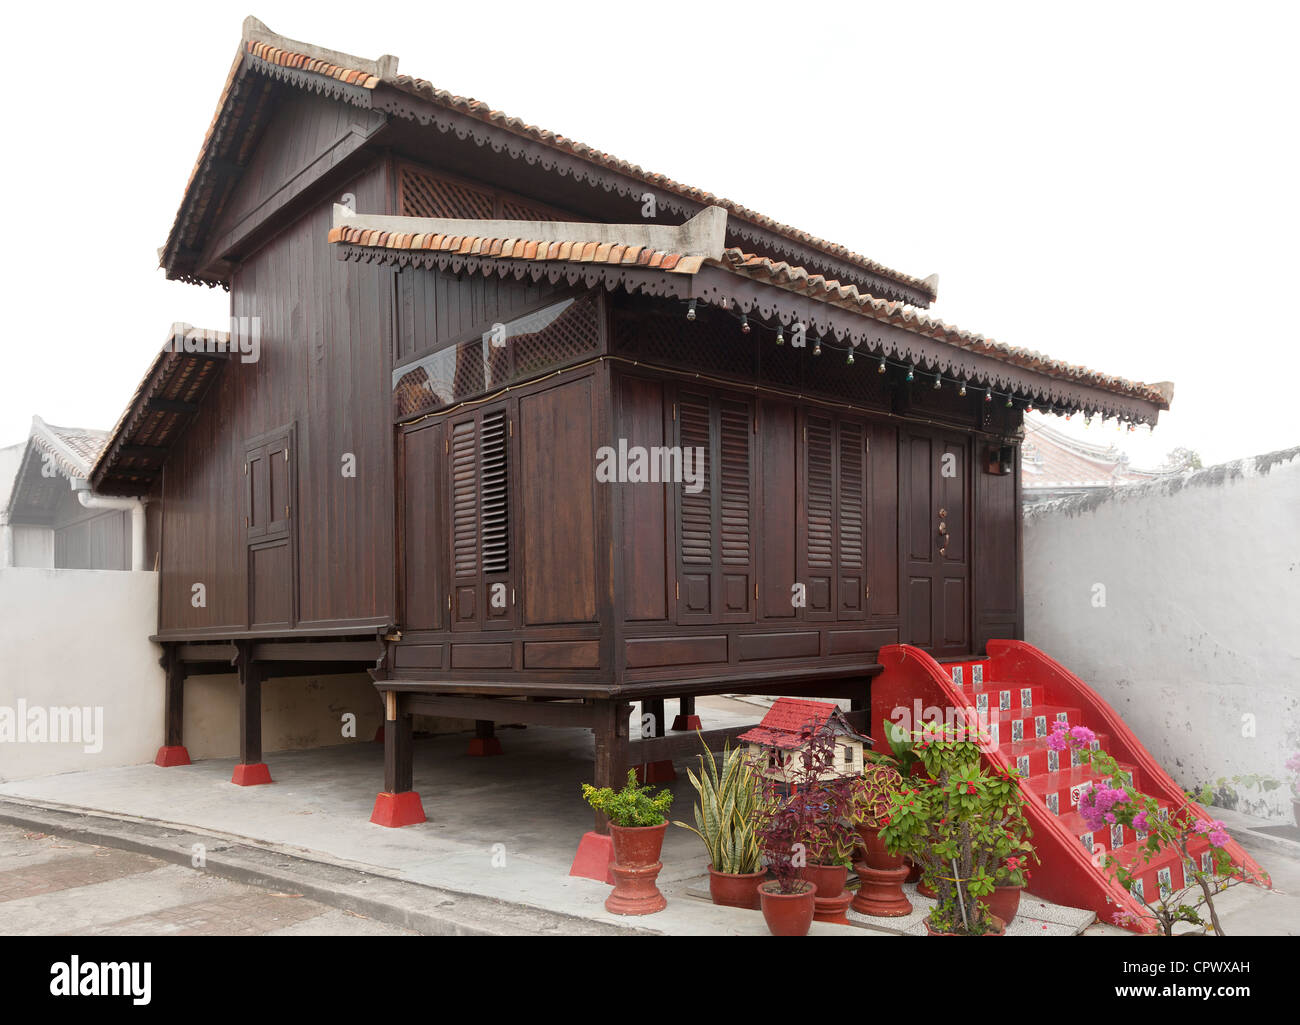 Traditionellen Teakholz Holzhaus auf Stelzen, Melaka, Malaysia Stockfoto